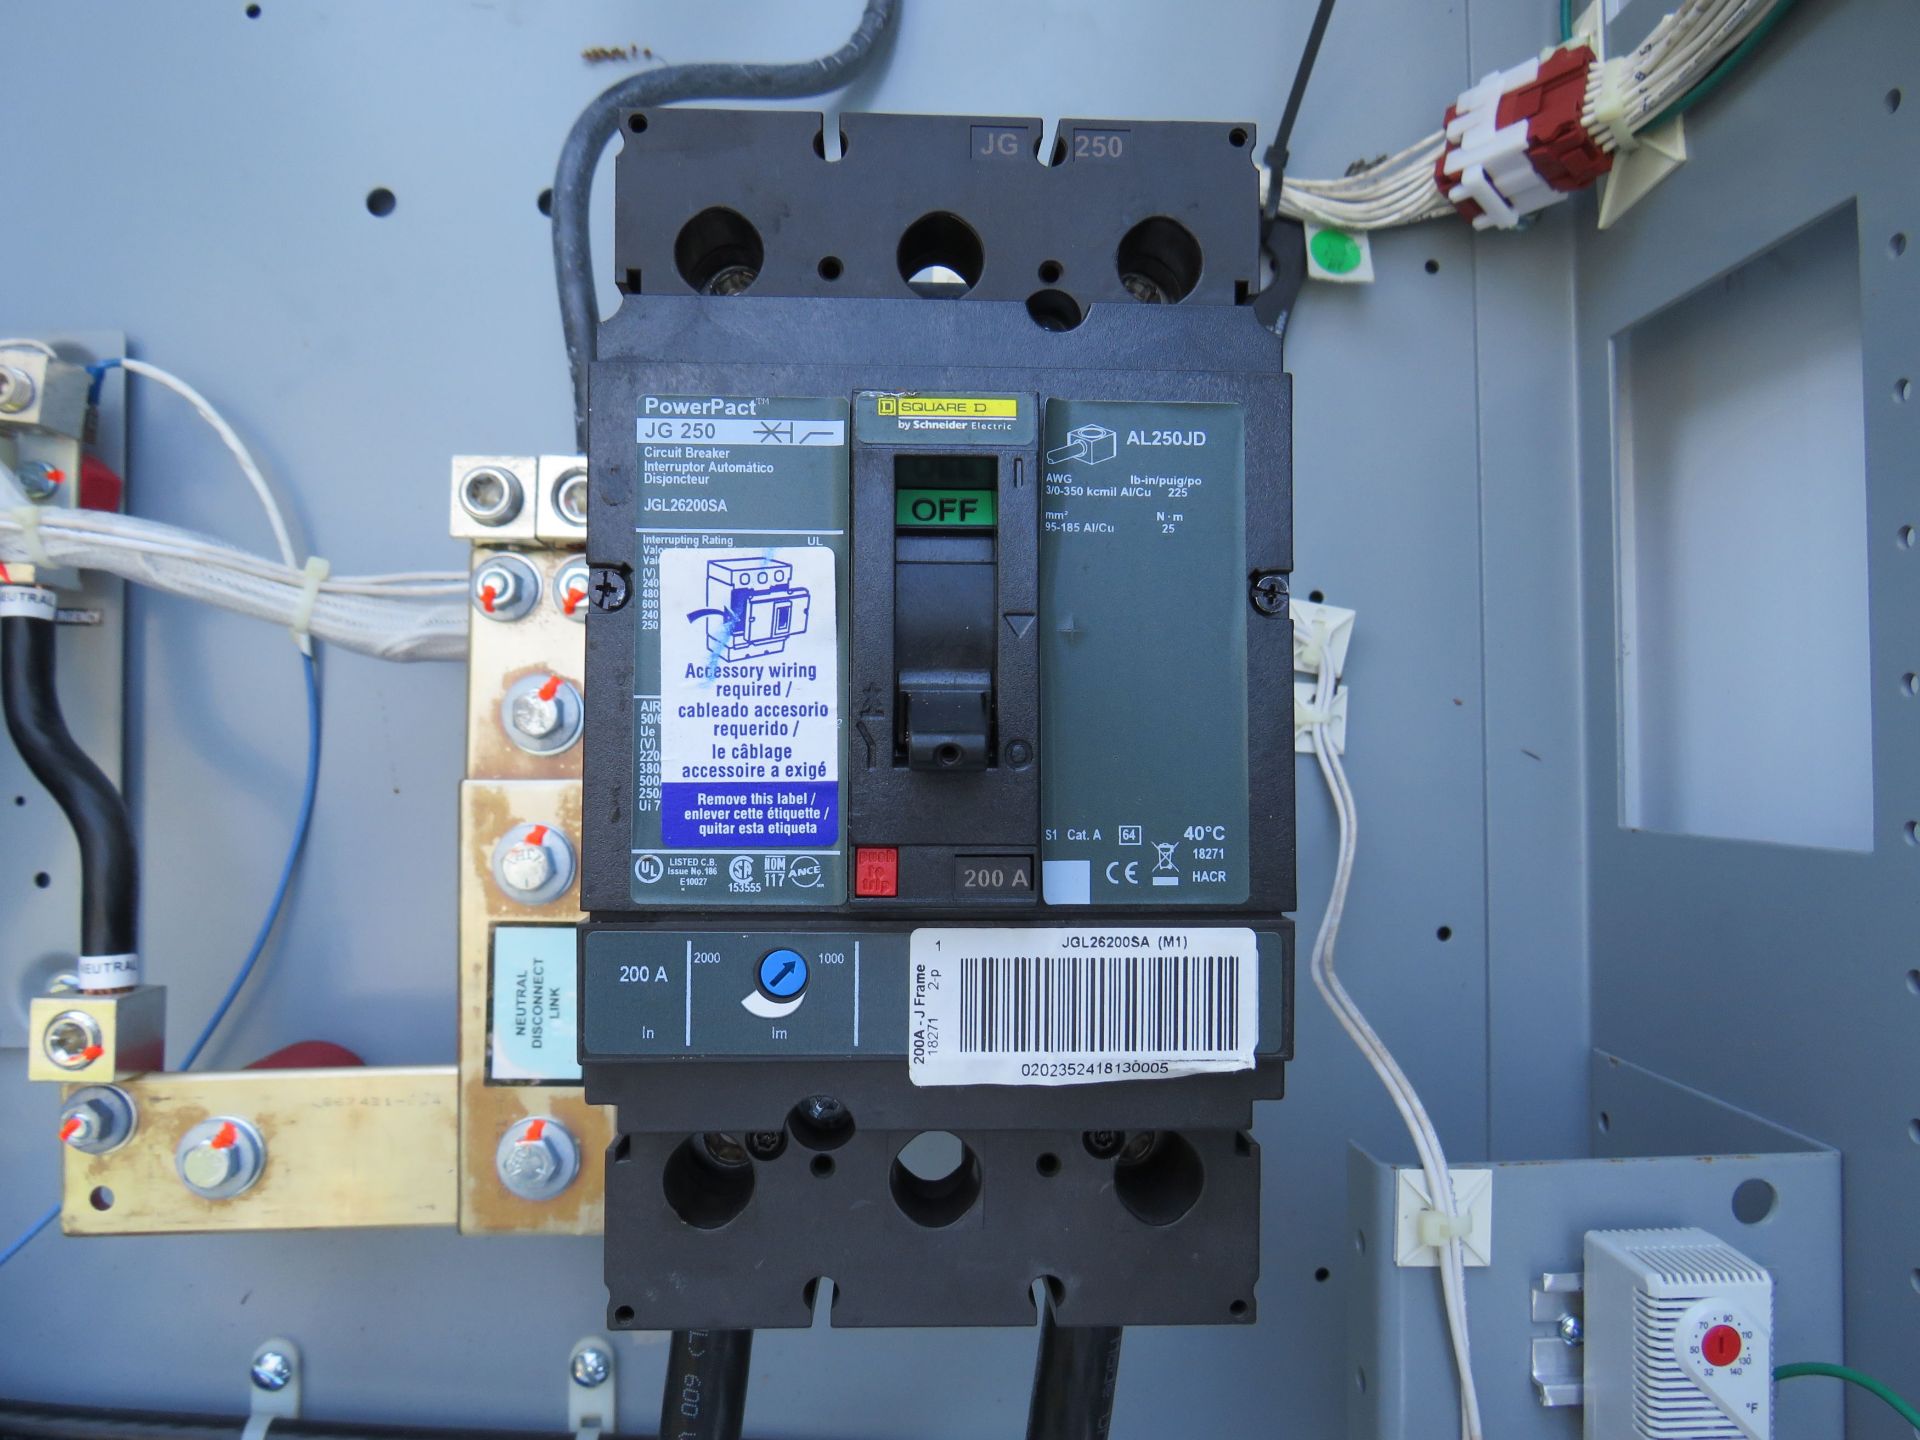 Asgo 200 amp control panel for generator - Image 5 of 9